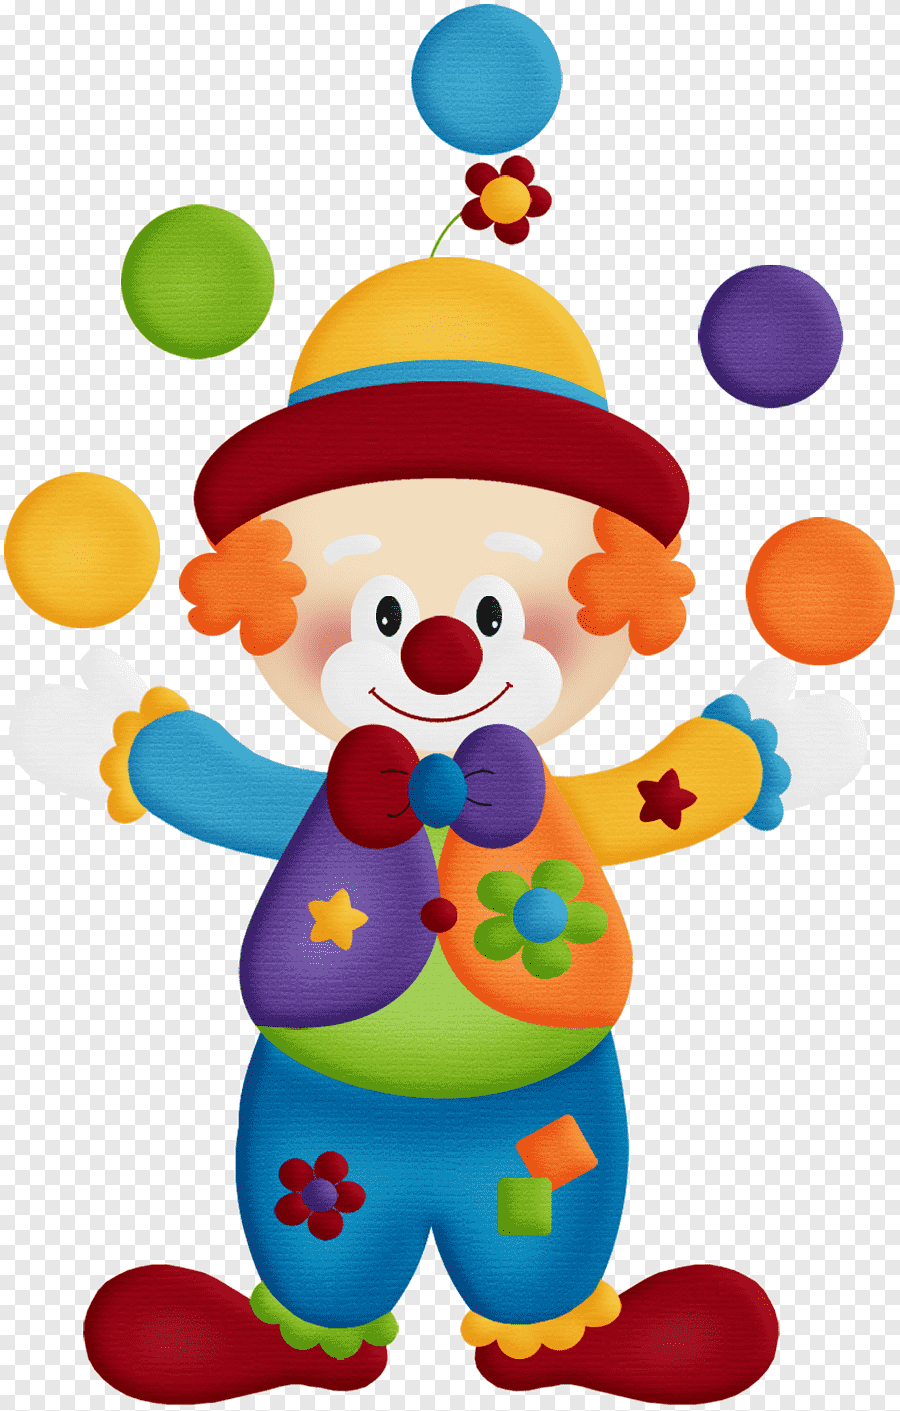 Клоуны для детей. Картина клоуна для детей. Клоун жонглер. Клоун мультяшный. Клоун для малышей